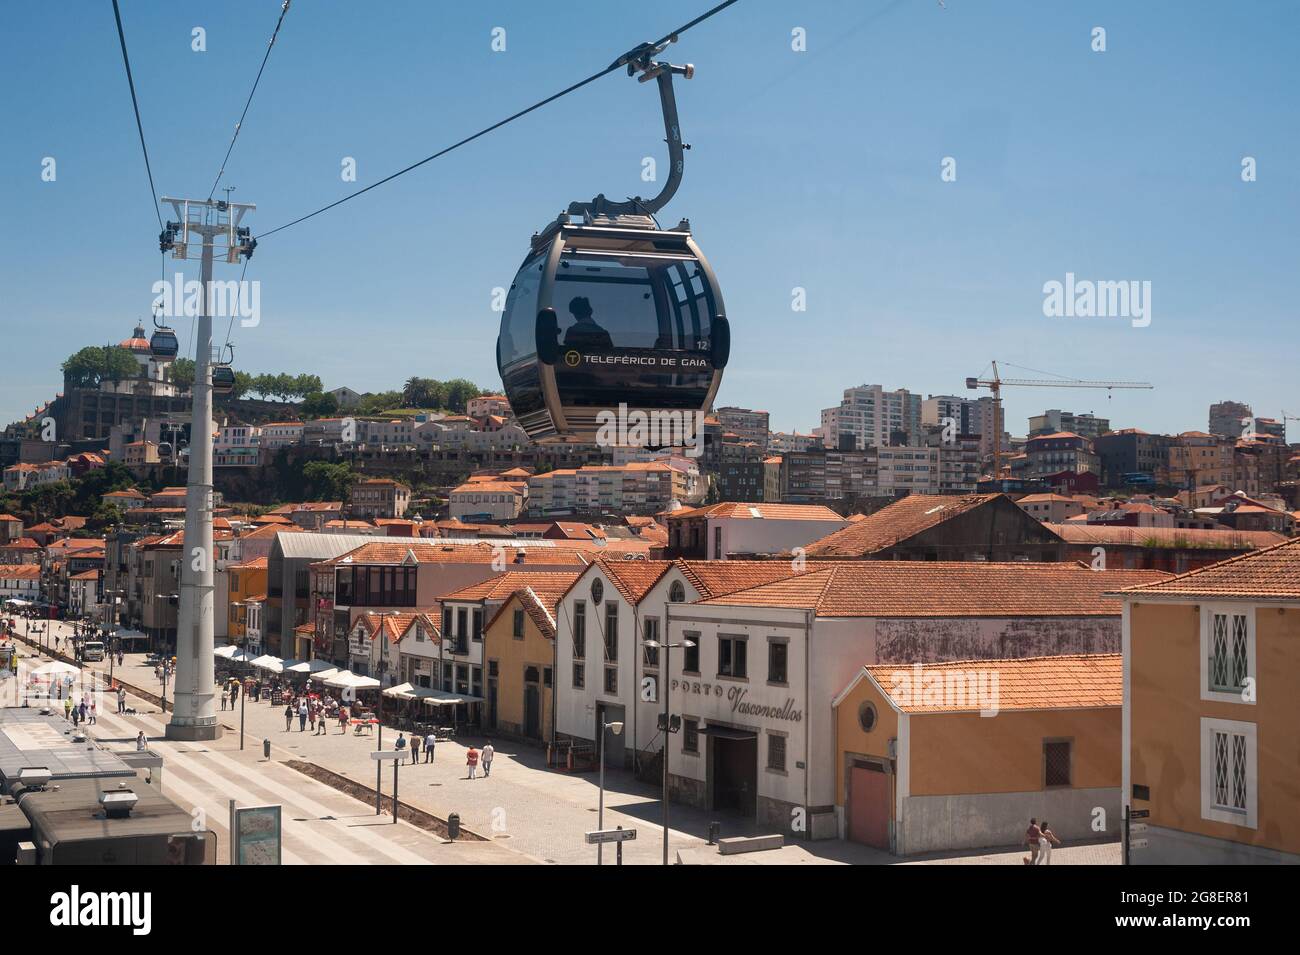 14.06.2018, Porto, Portugal, Europe - View from a gondola of the Teleferico  de Gaia cable car of the cityscape of Vila Nova de Gaia with buildings  Stock Photo - Alamy